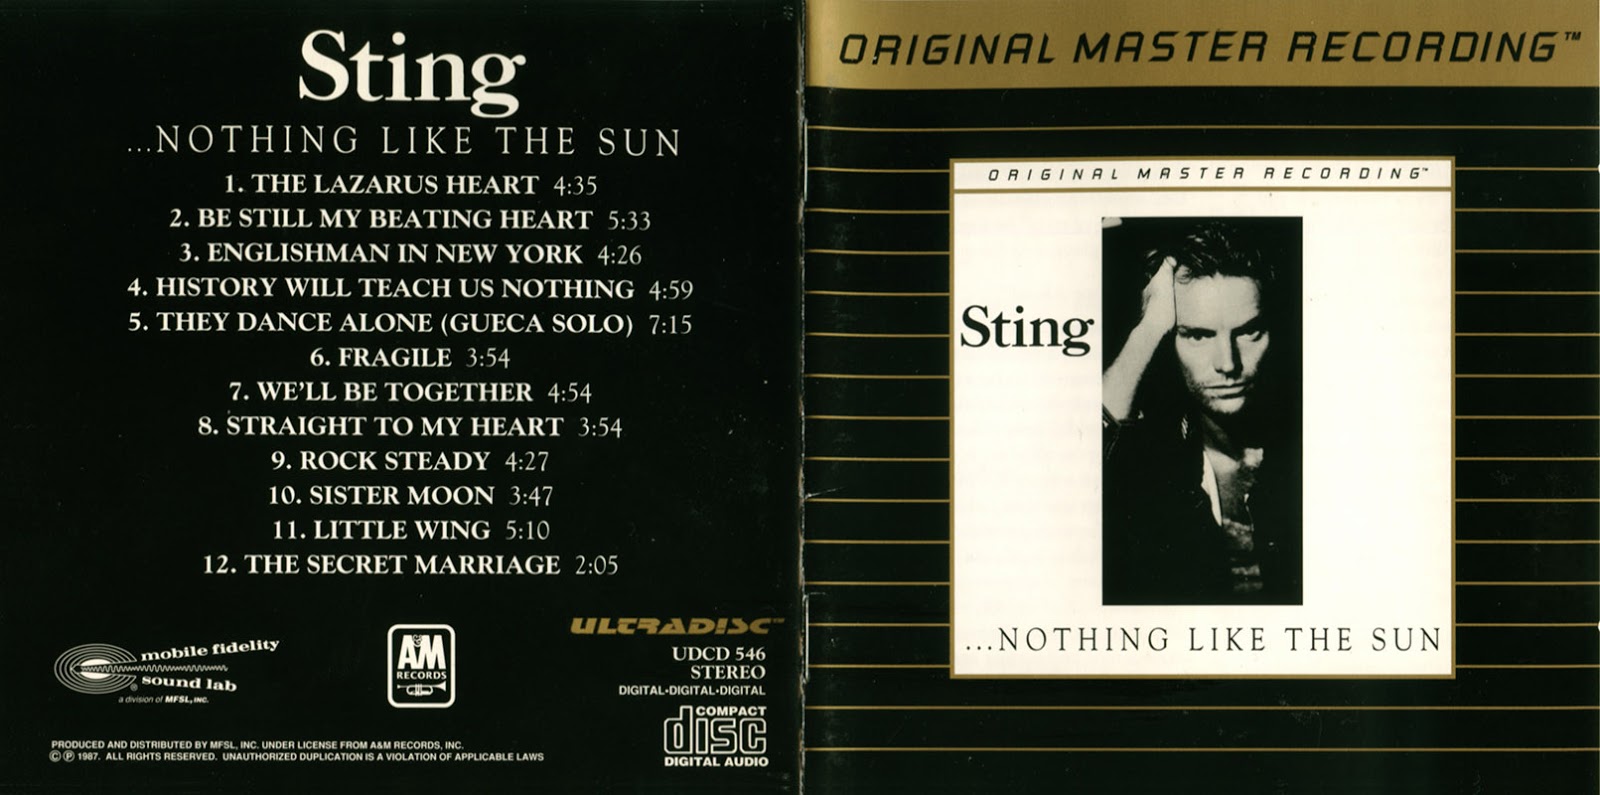 Nothing new песня. Sting 1987. 1987 - ...Nothing like the Sun. CD Sting: nothing like Sun. Sting nothing like the Sun 2lp.